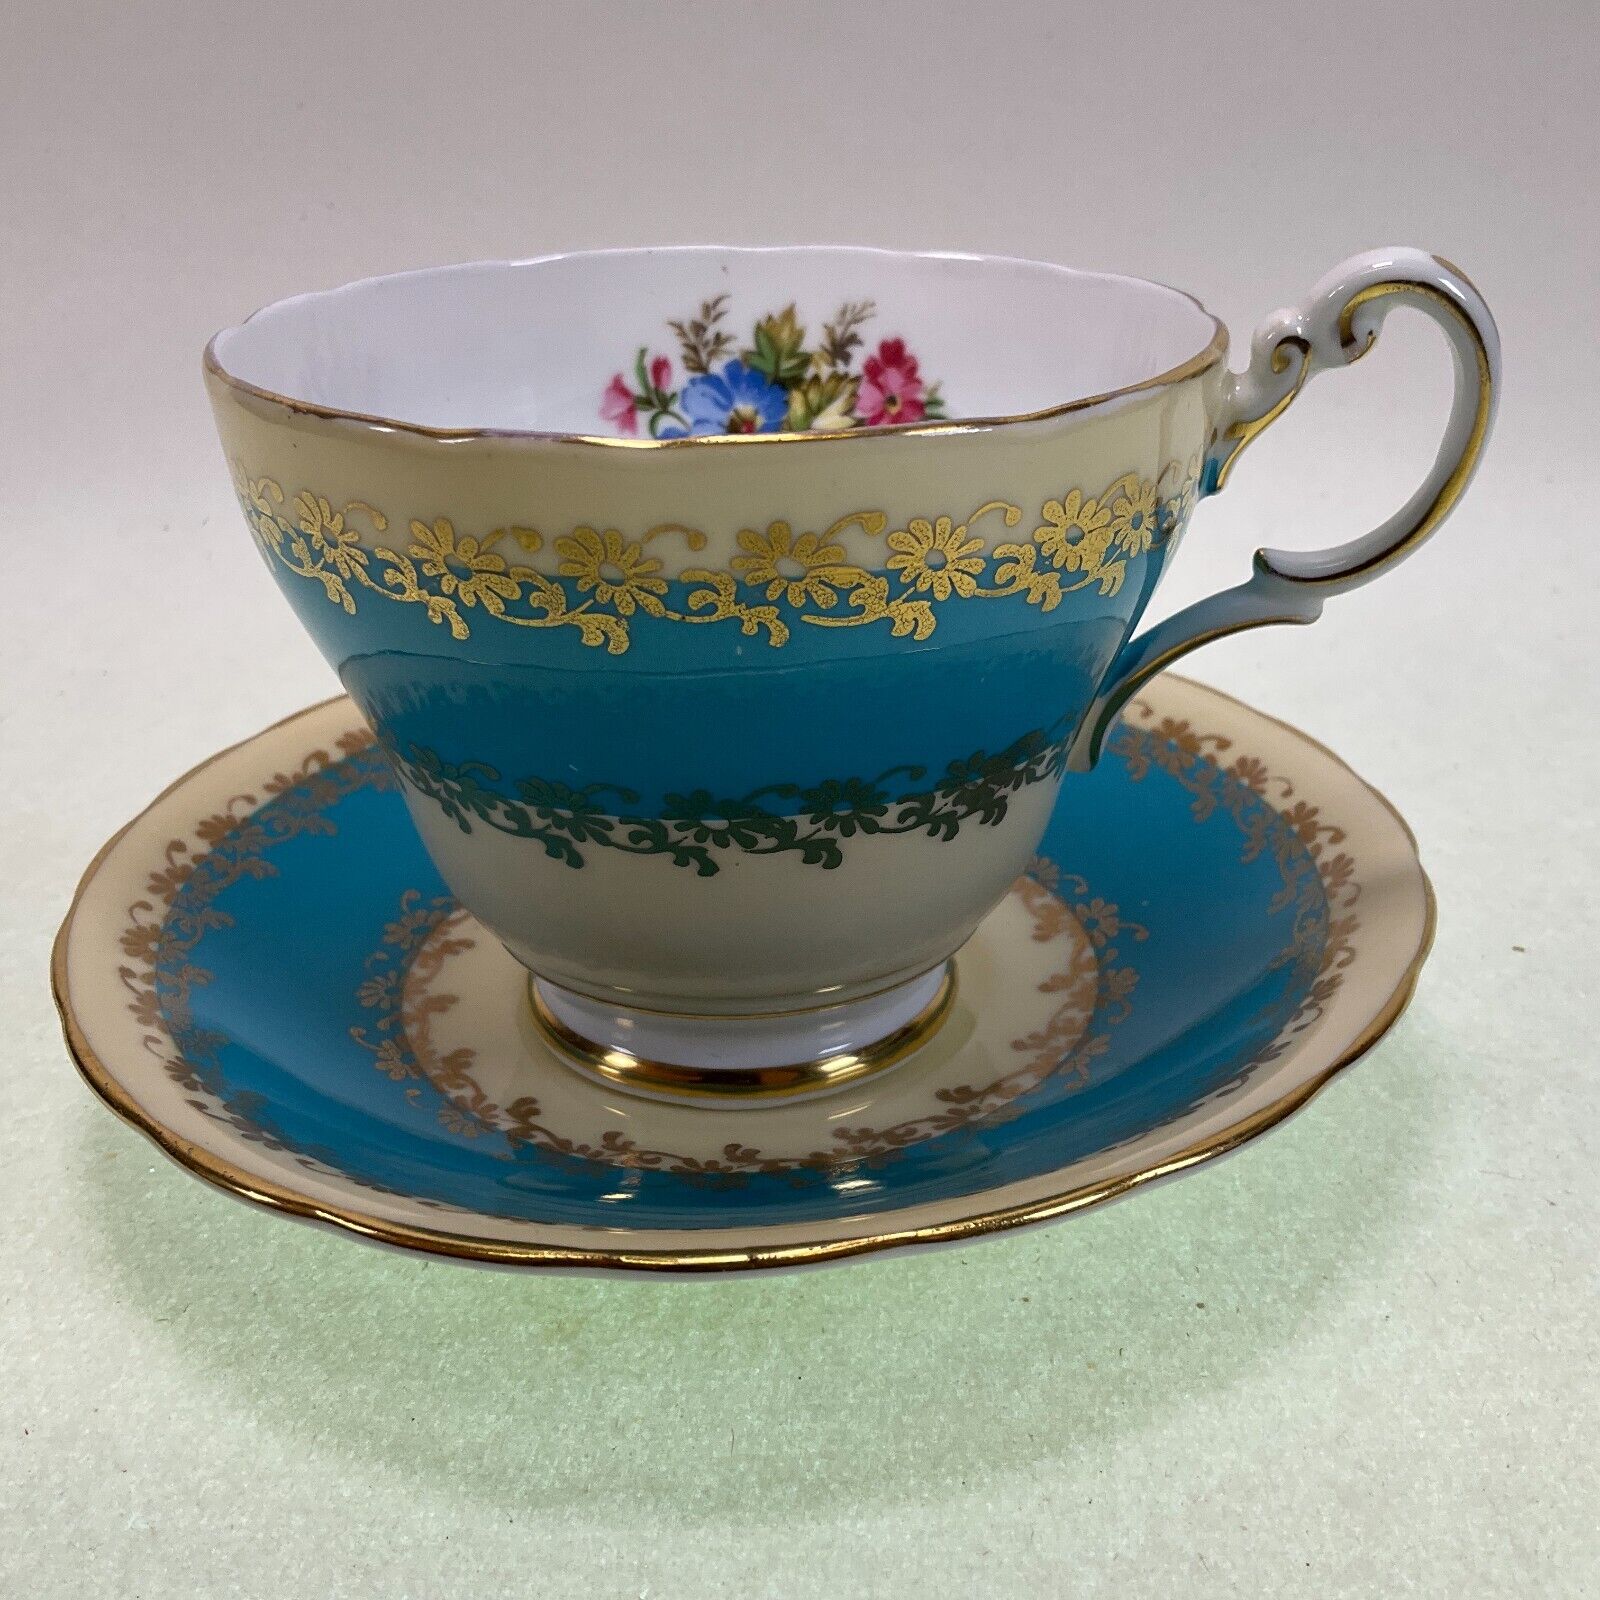 Victoria Fine Bone China Teacup & Saucer - Flowers - England